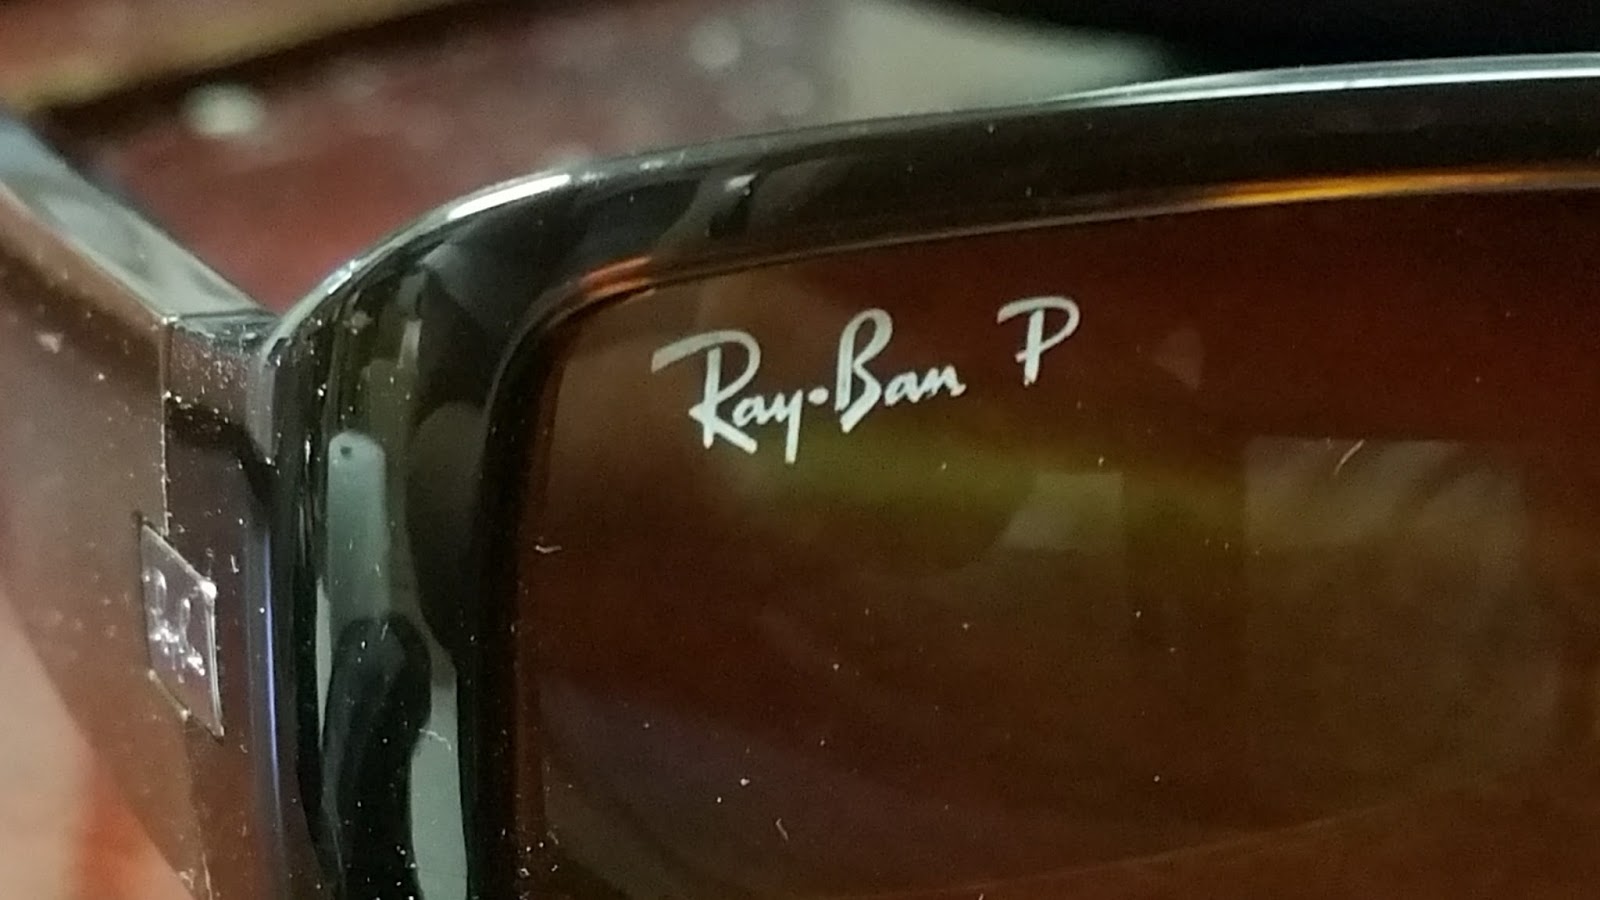 ray ban p logo on lens